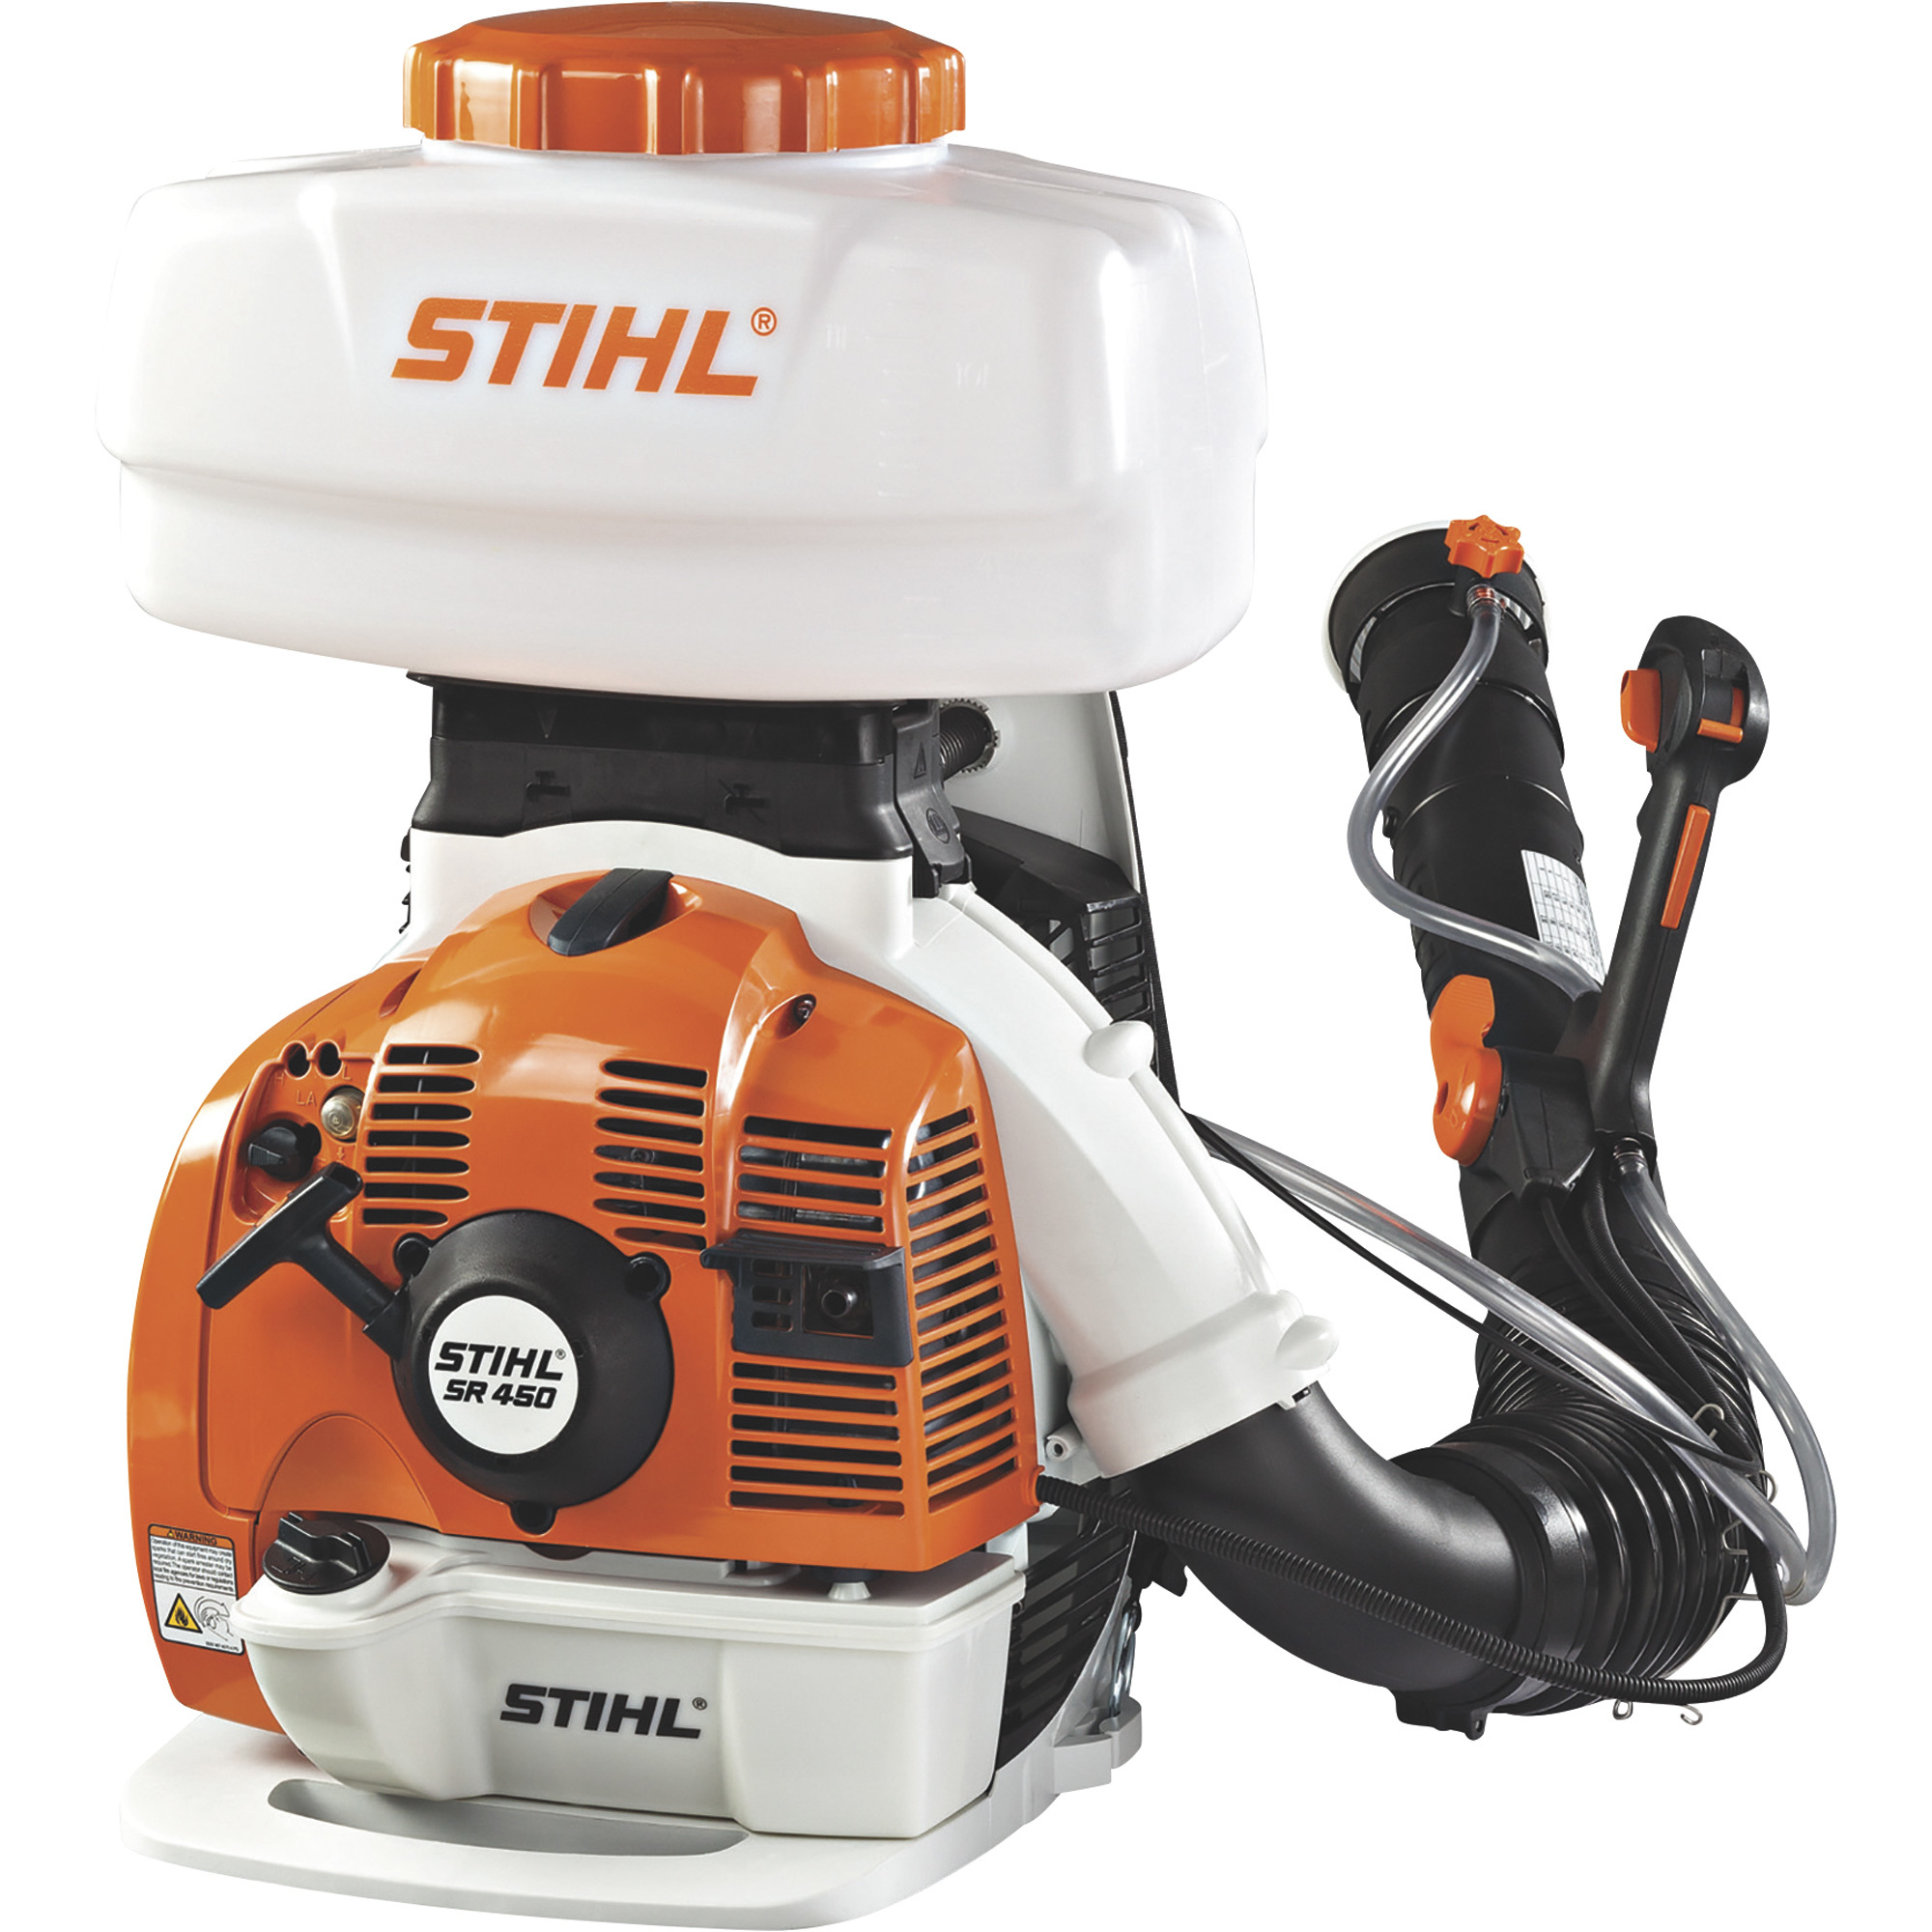 STIHL Gas-Powered Professional-Grade Disinfectant Backpack Sprayer / Fogger, 3.7-Gallon Capacity, Model SR 450